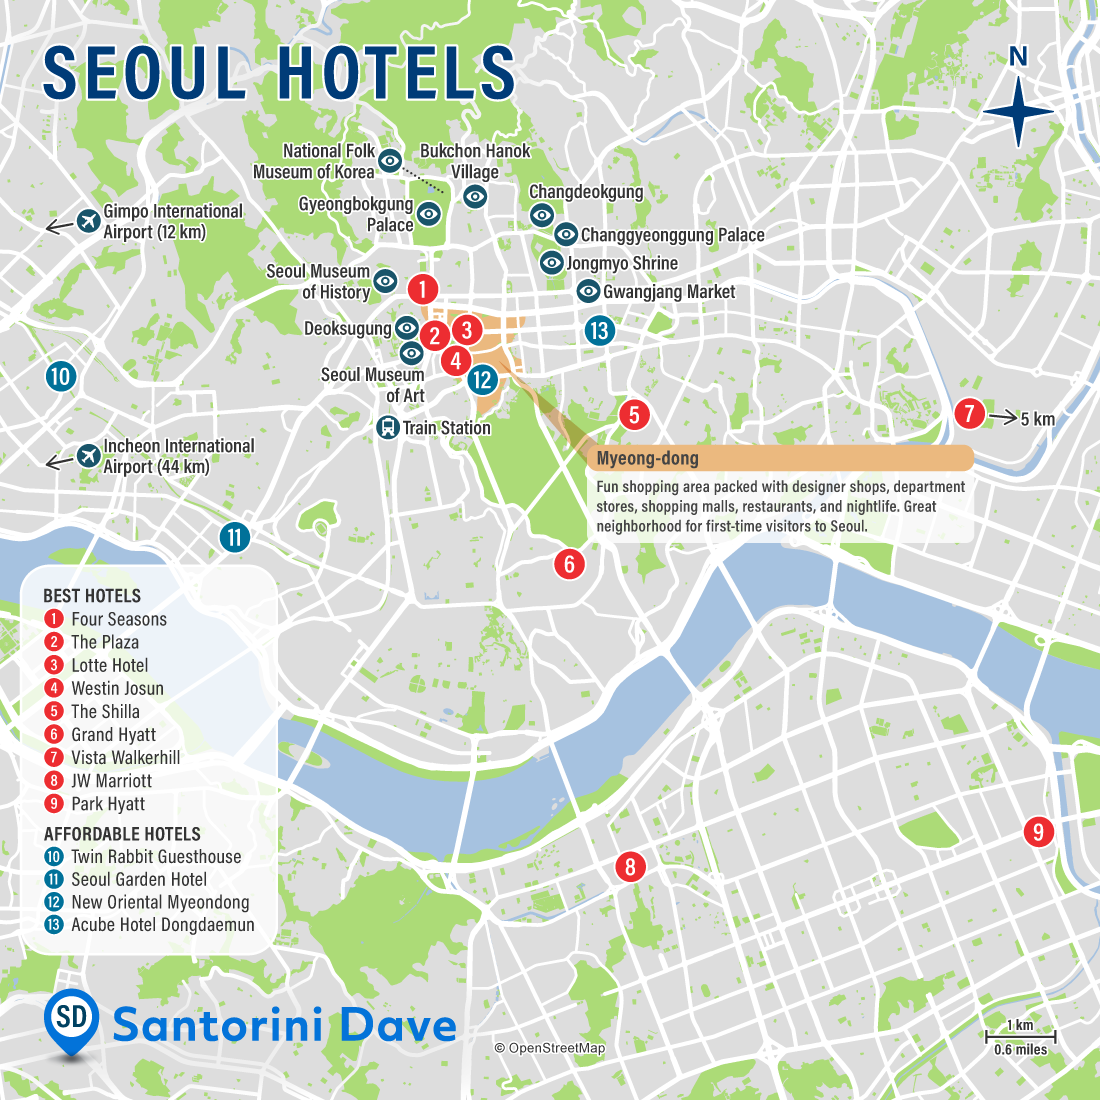 Map of Seoul Hotels and Neighborhoods